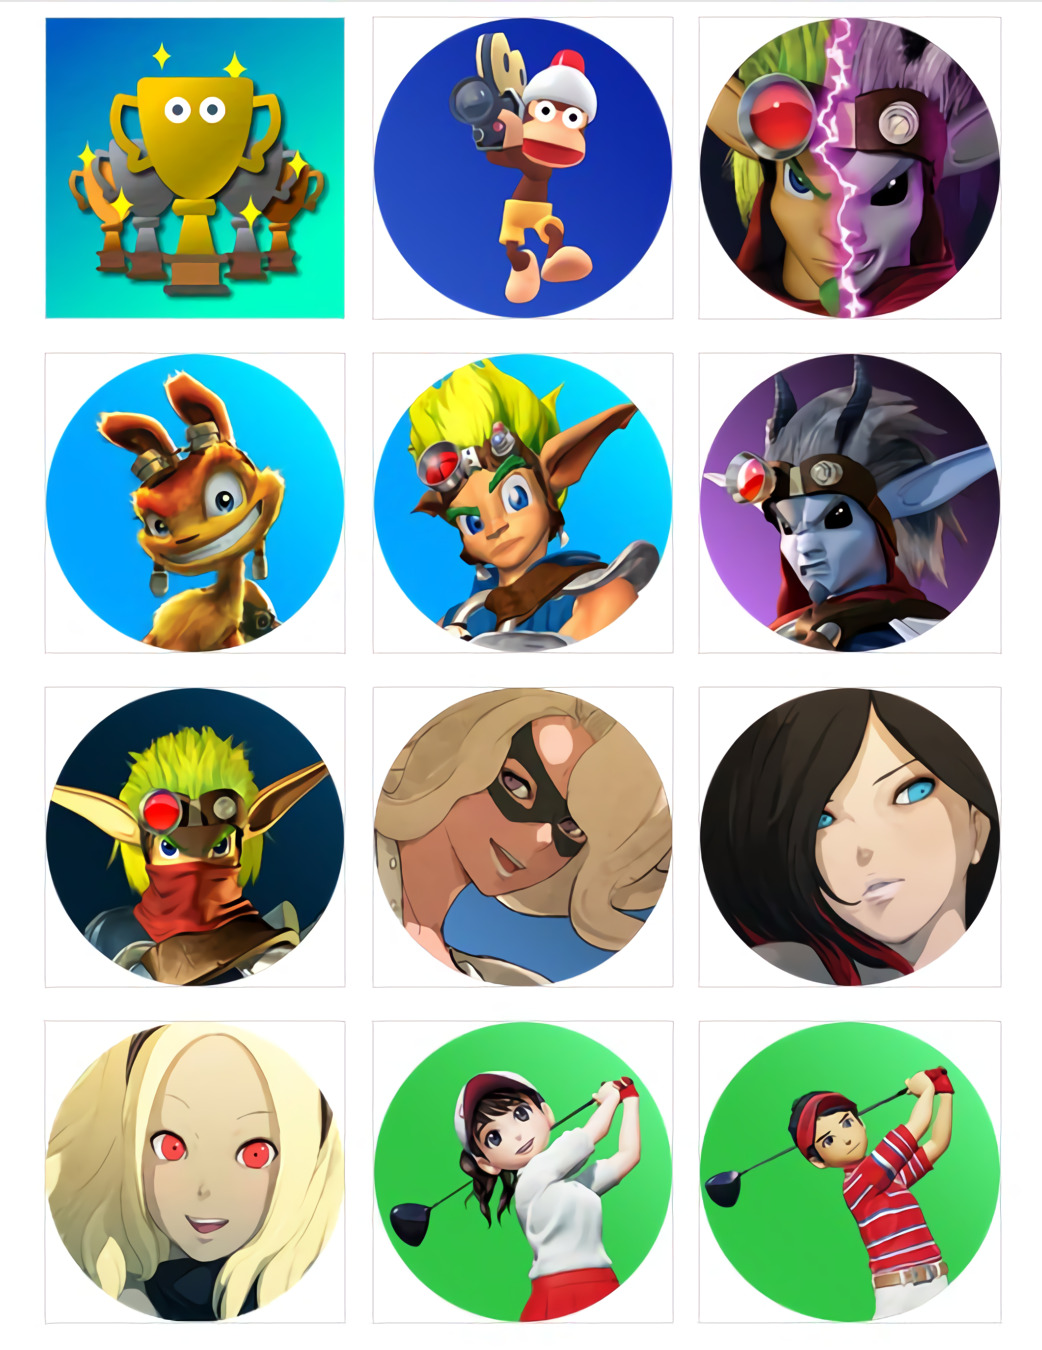 Playstation Network new avatars